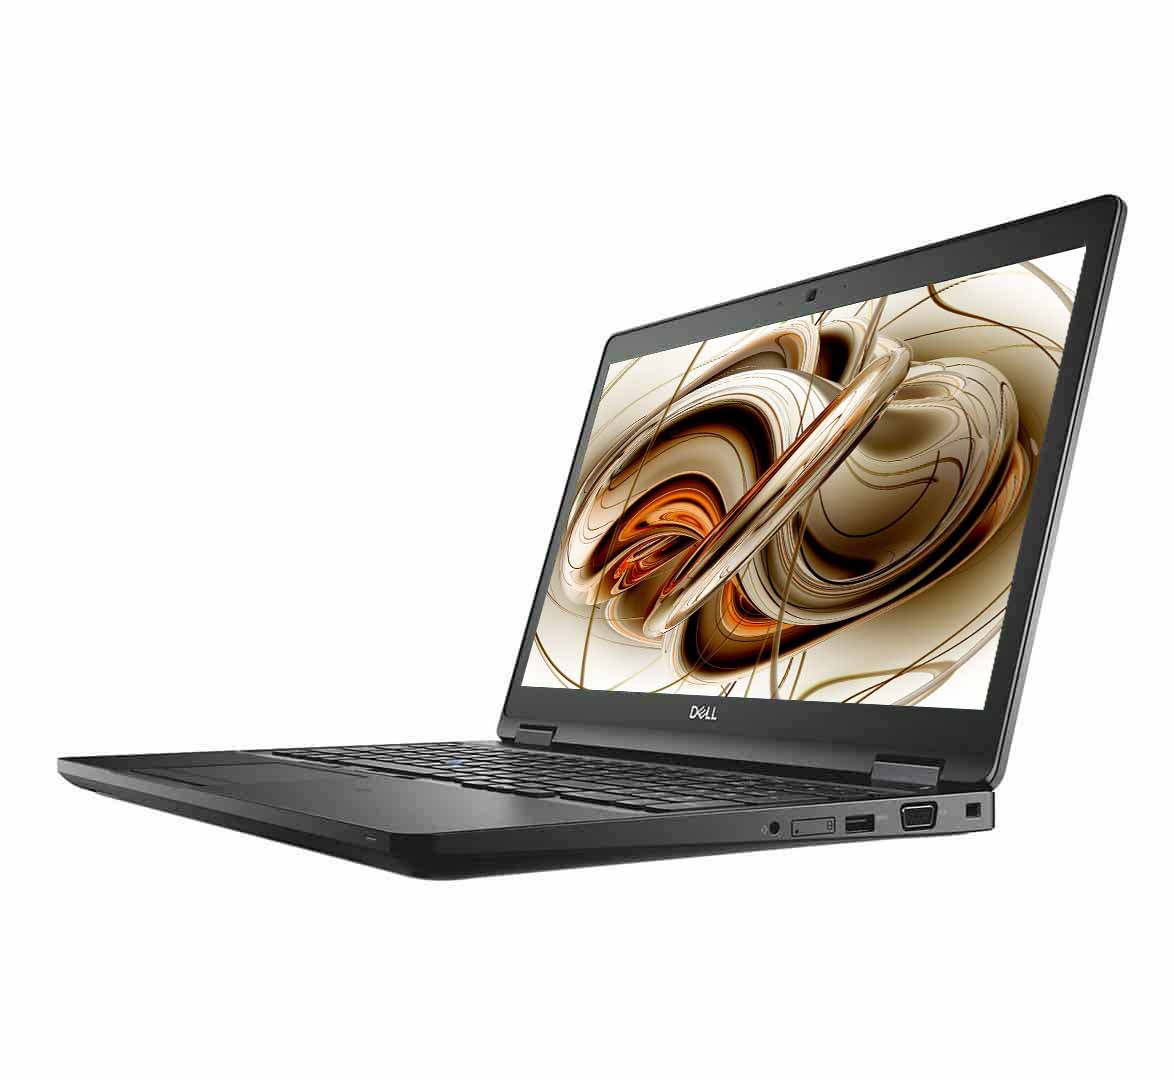 Dell Latitude 5590 Business Laptop, Intel Core i7-8th Generation CPU, 16GB RAM, 512GB SSD, 15.6 inch Display, Windows 10 Pro, Refurbished Laptop